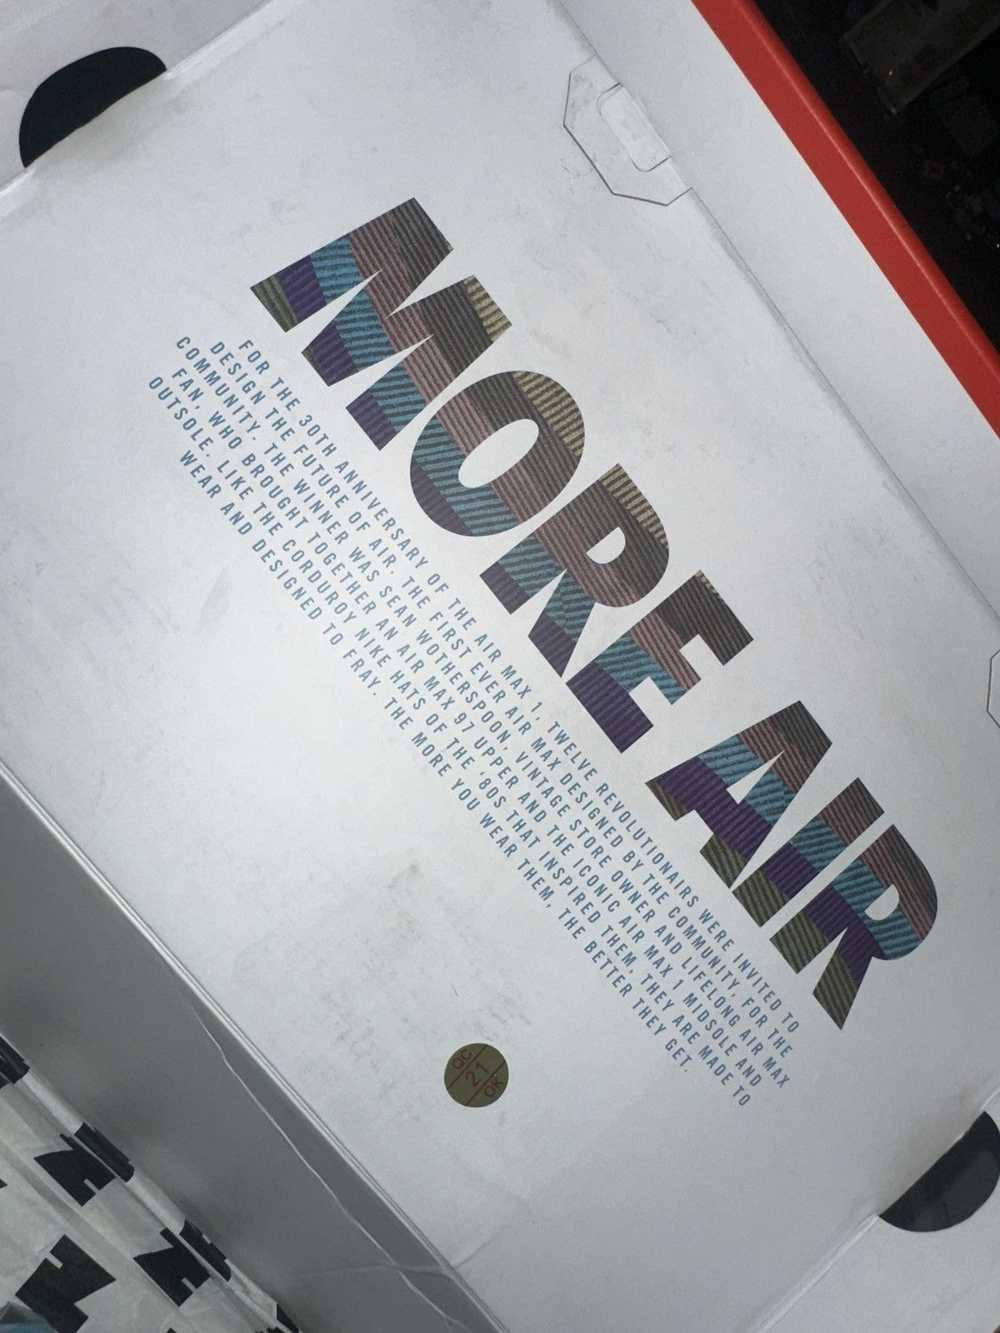 Nike Sean wotherspoon air max 1/97 - image 9